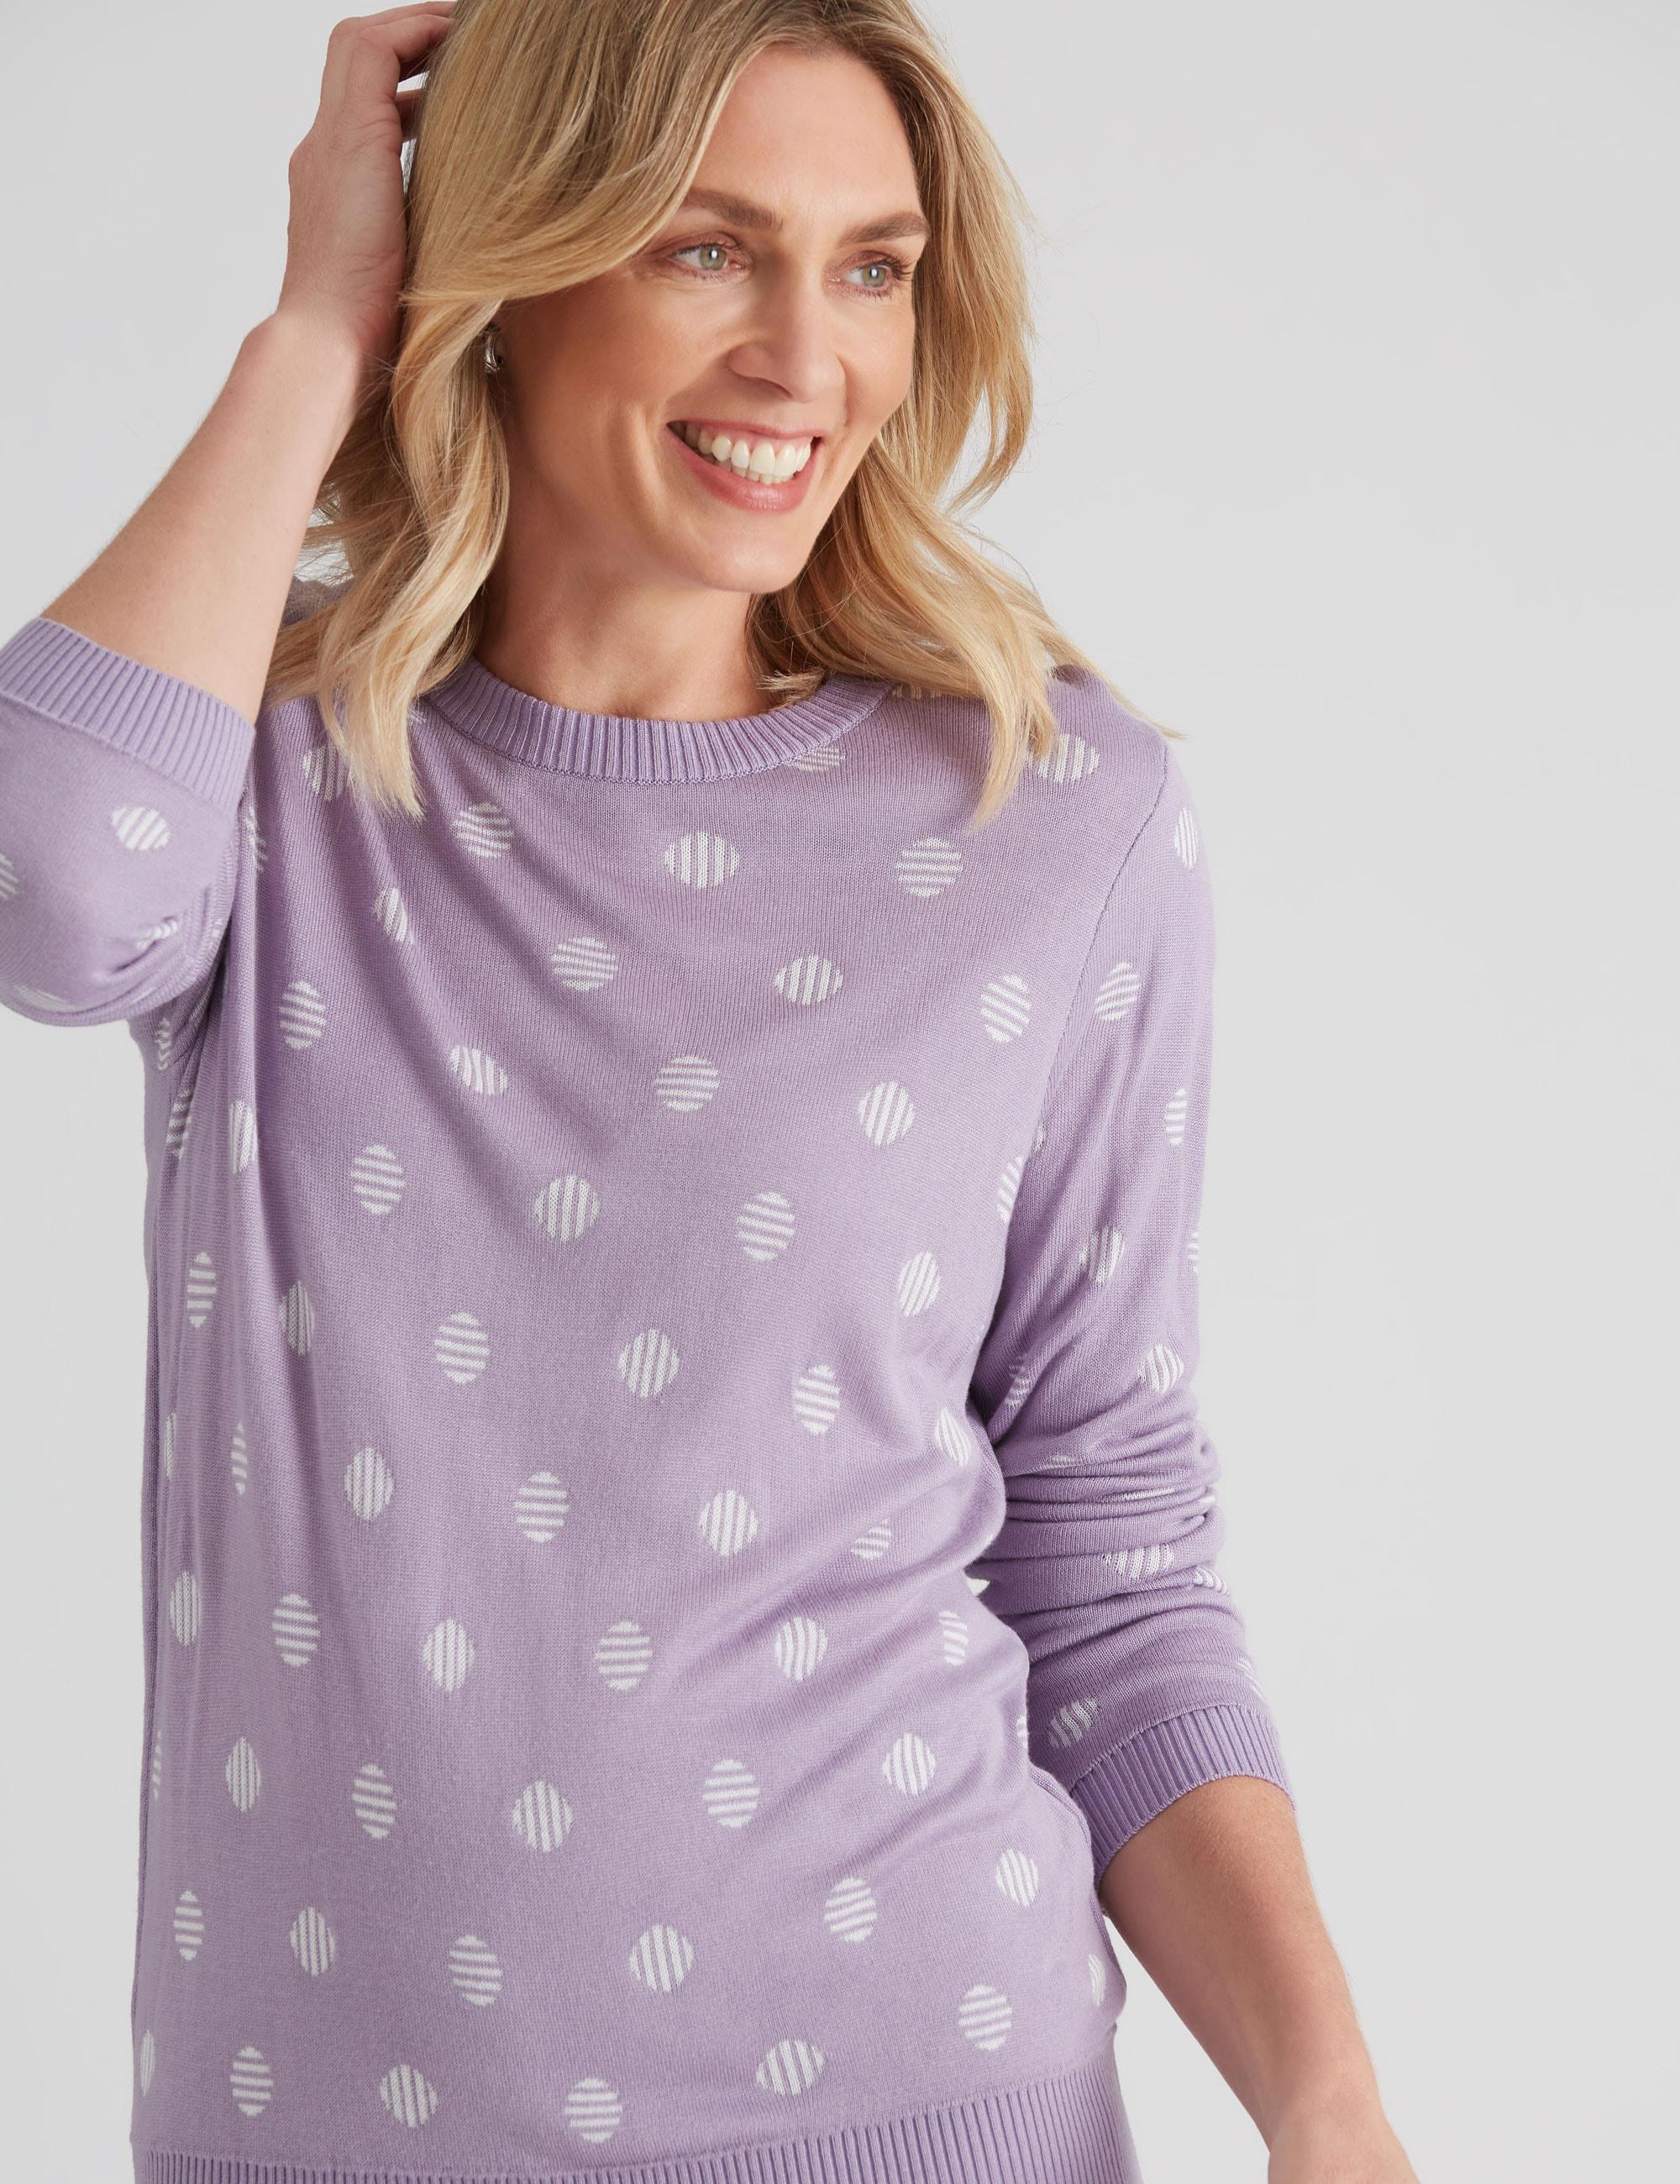 NONI B - Womens Jumper - Regular All Season Sweater - Purple Pullover - Design - Knitwear - Sleeveless - Polkadot - Oversized - Square Neck Work Wear